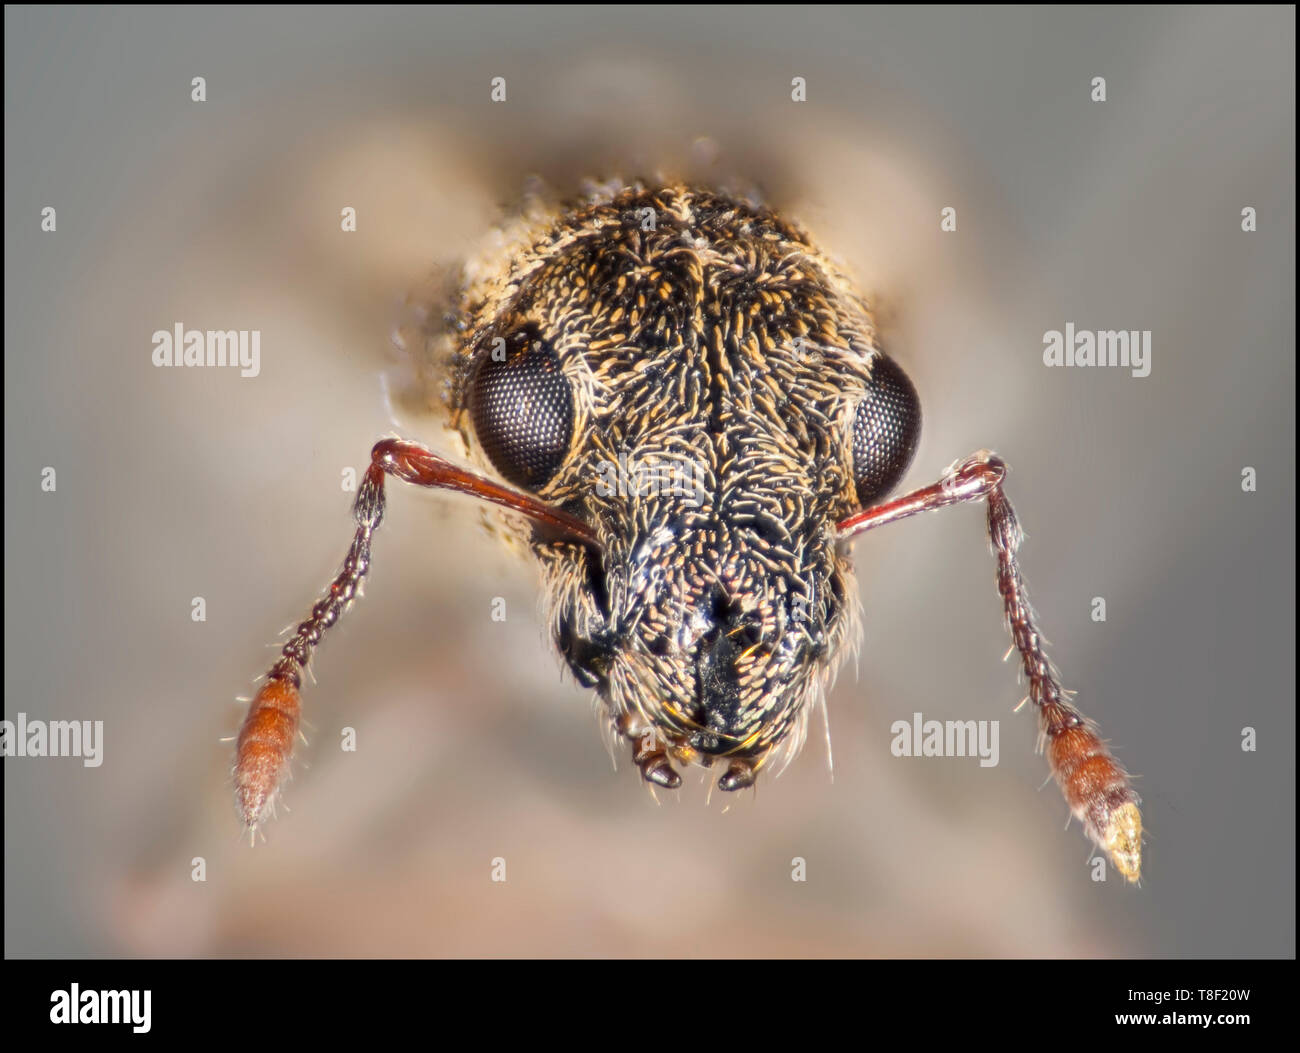 Pea blatt Rüsselkäfer, Sitona lineatus, hohe makro Ansicht von Kopf und mundwerkzeuge. Stockfoto